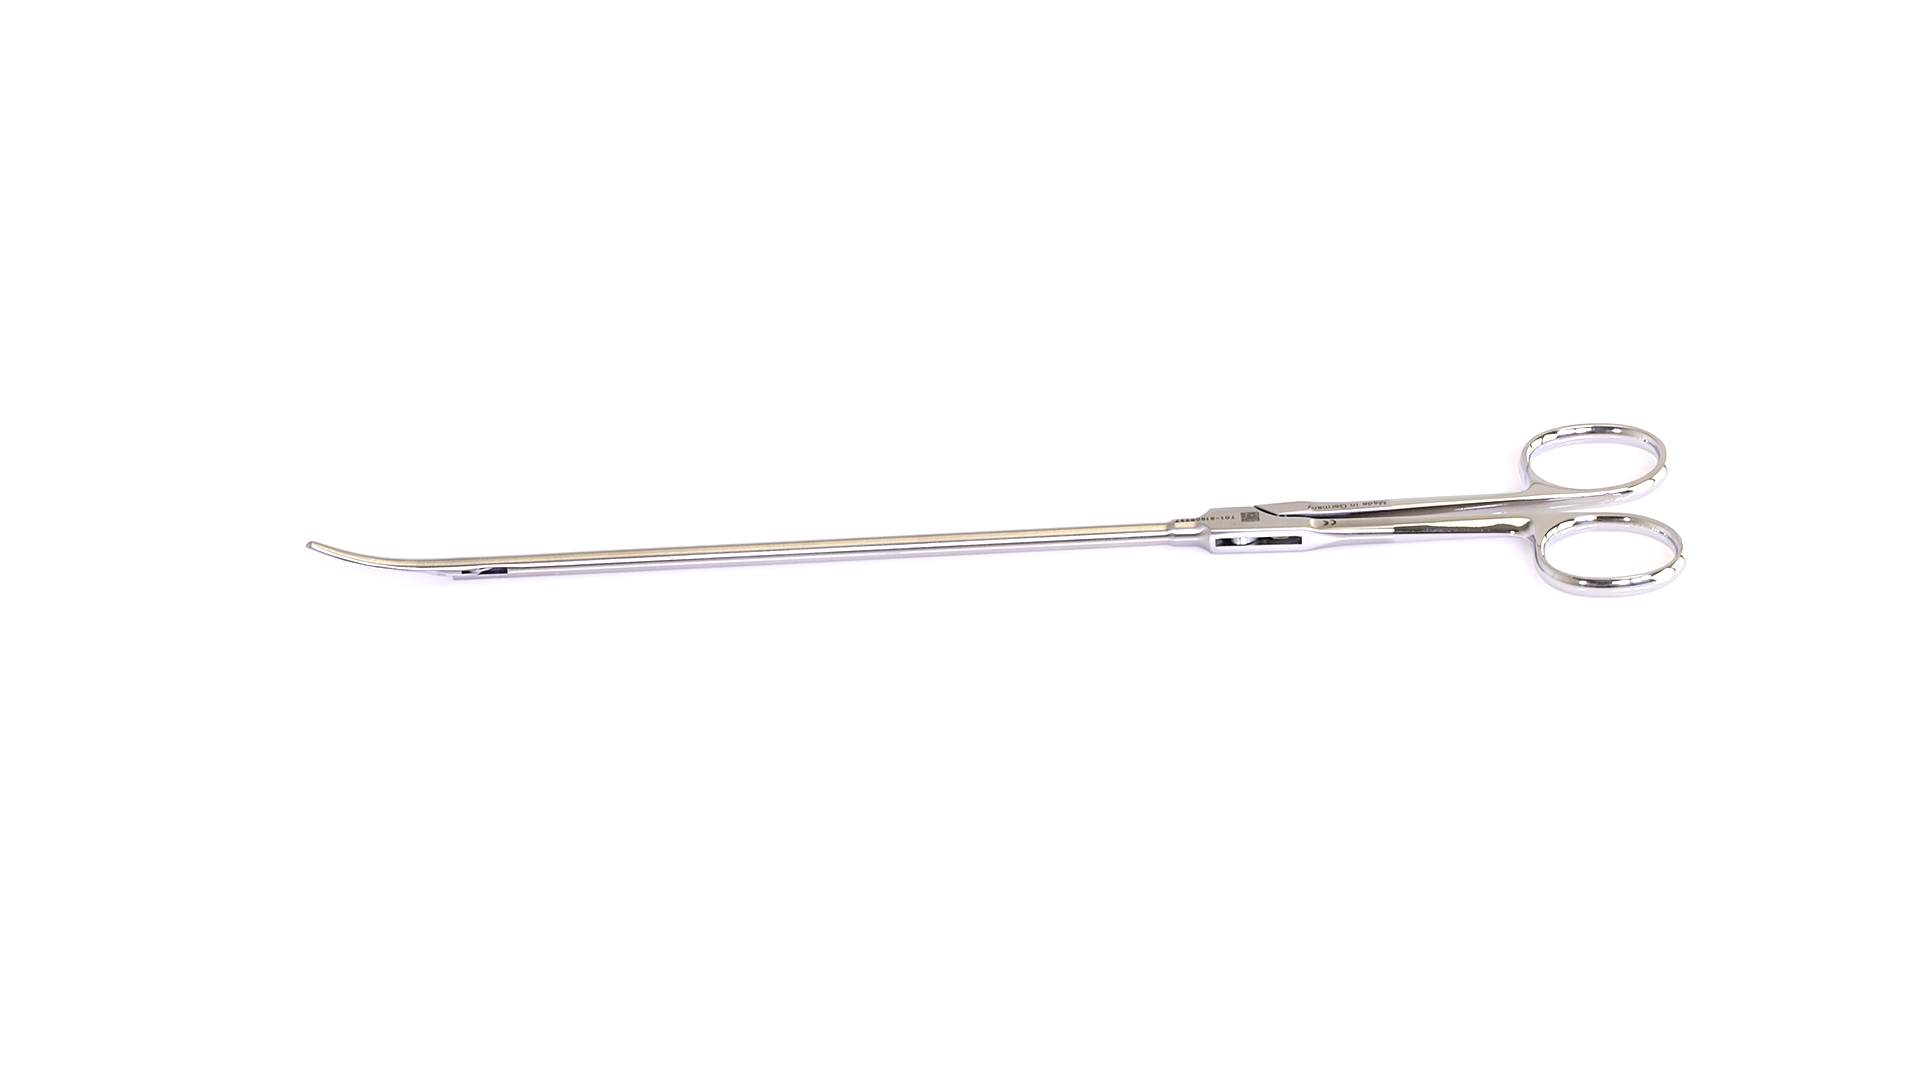 Thoracoscopic Dissecting Scissors - Curved 3cm Razor Edge blades w/Blunt tips